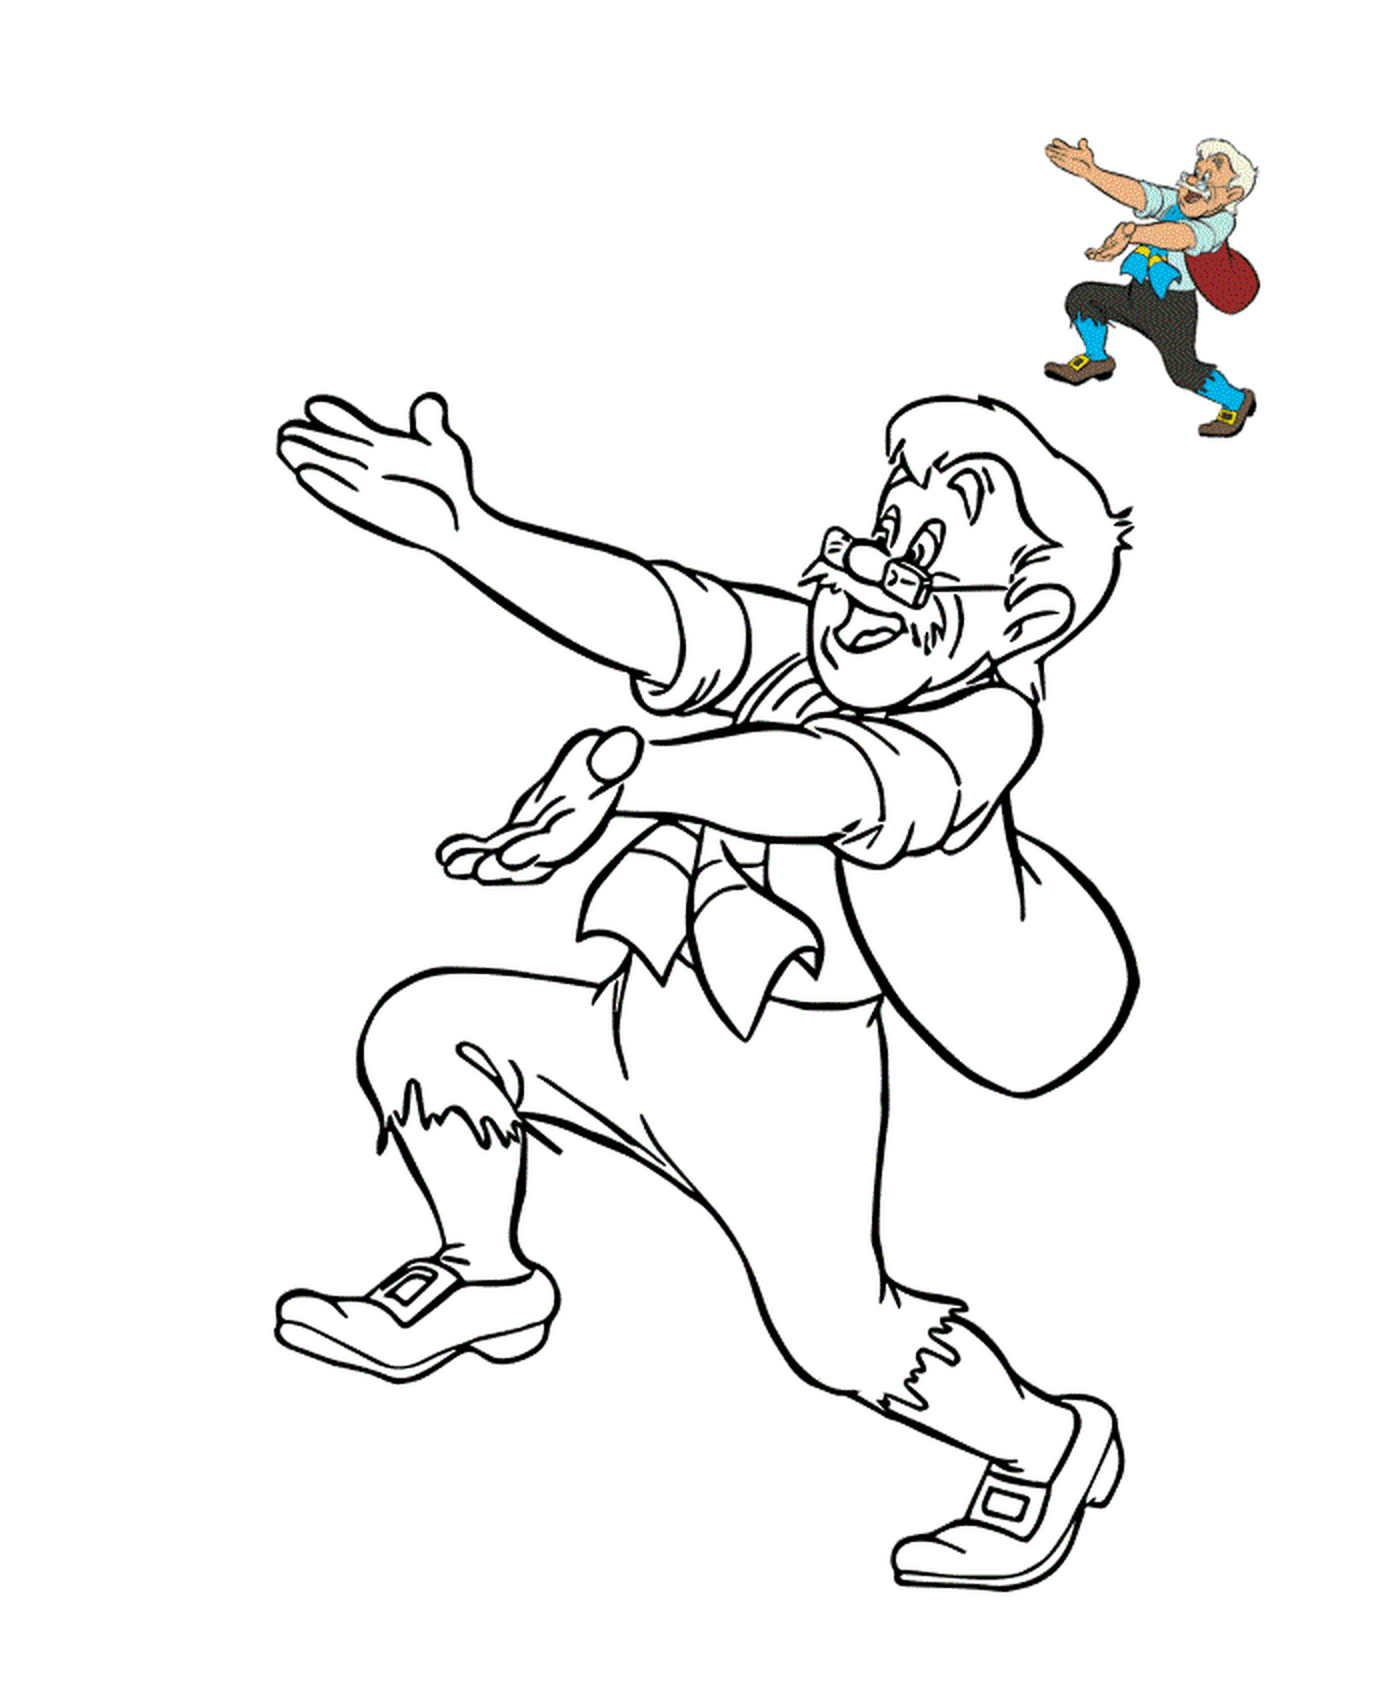   Geppetto, menuisier italien modeste 